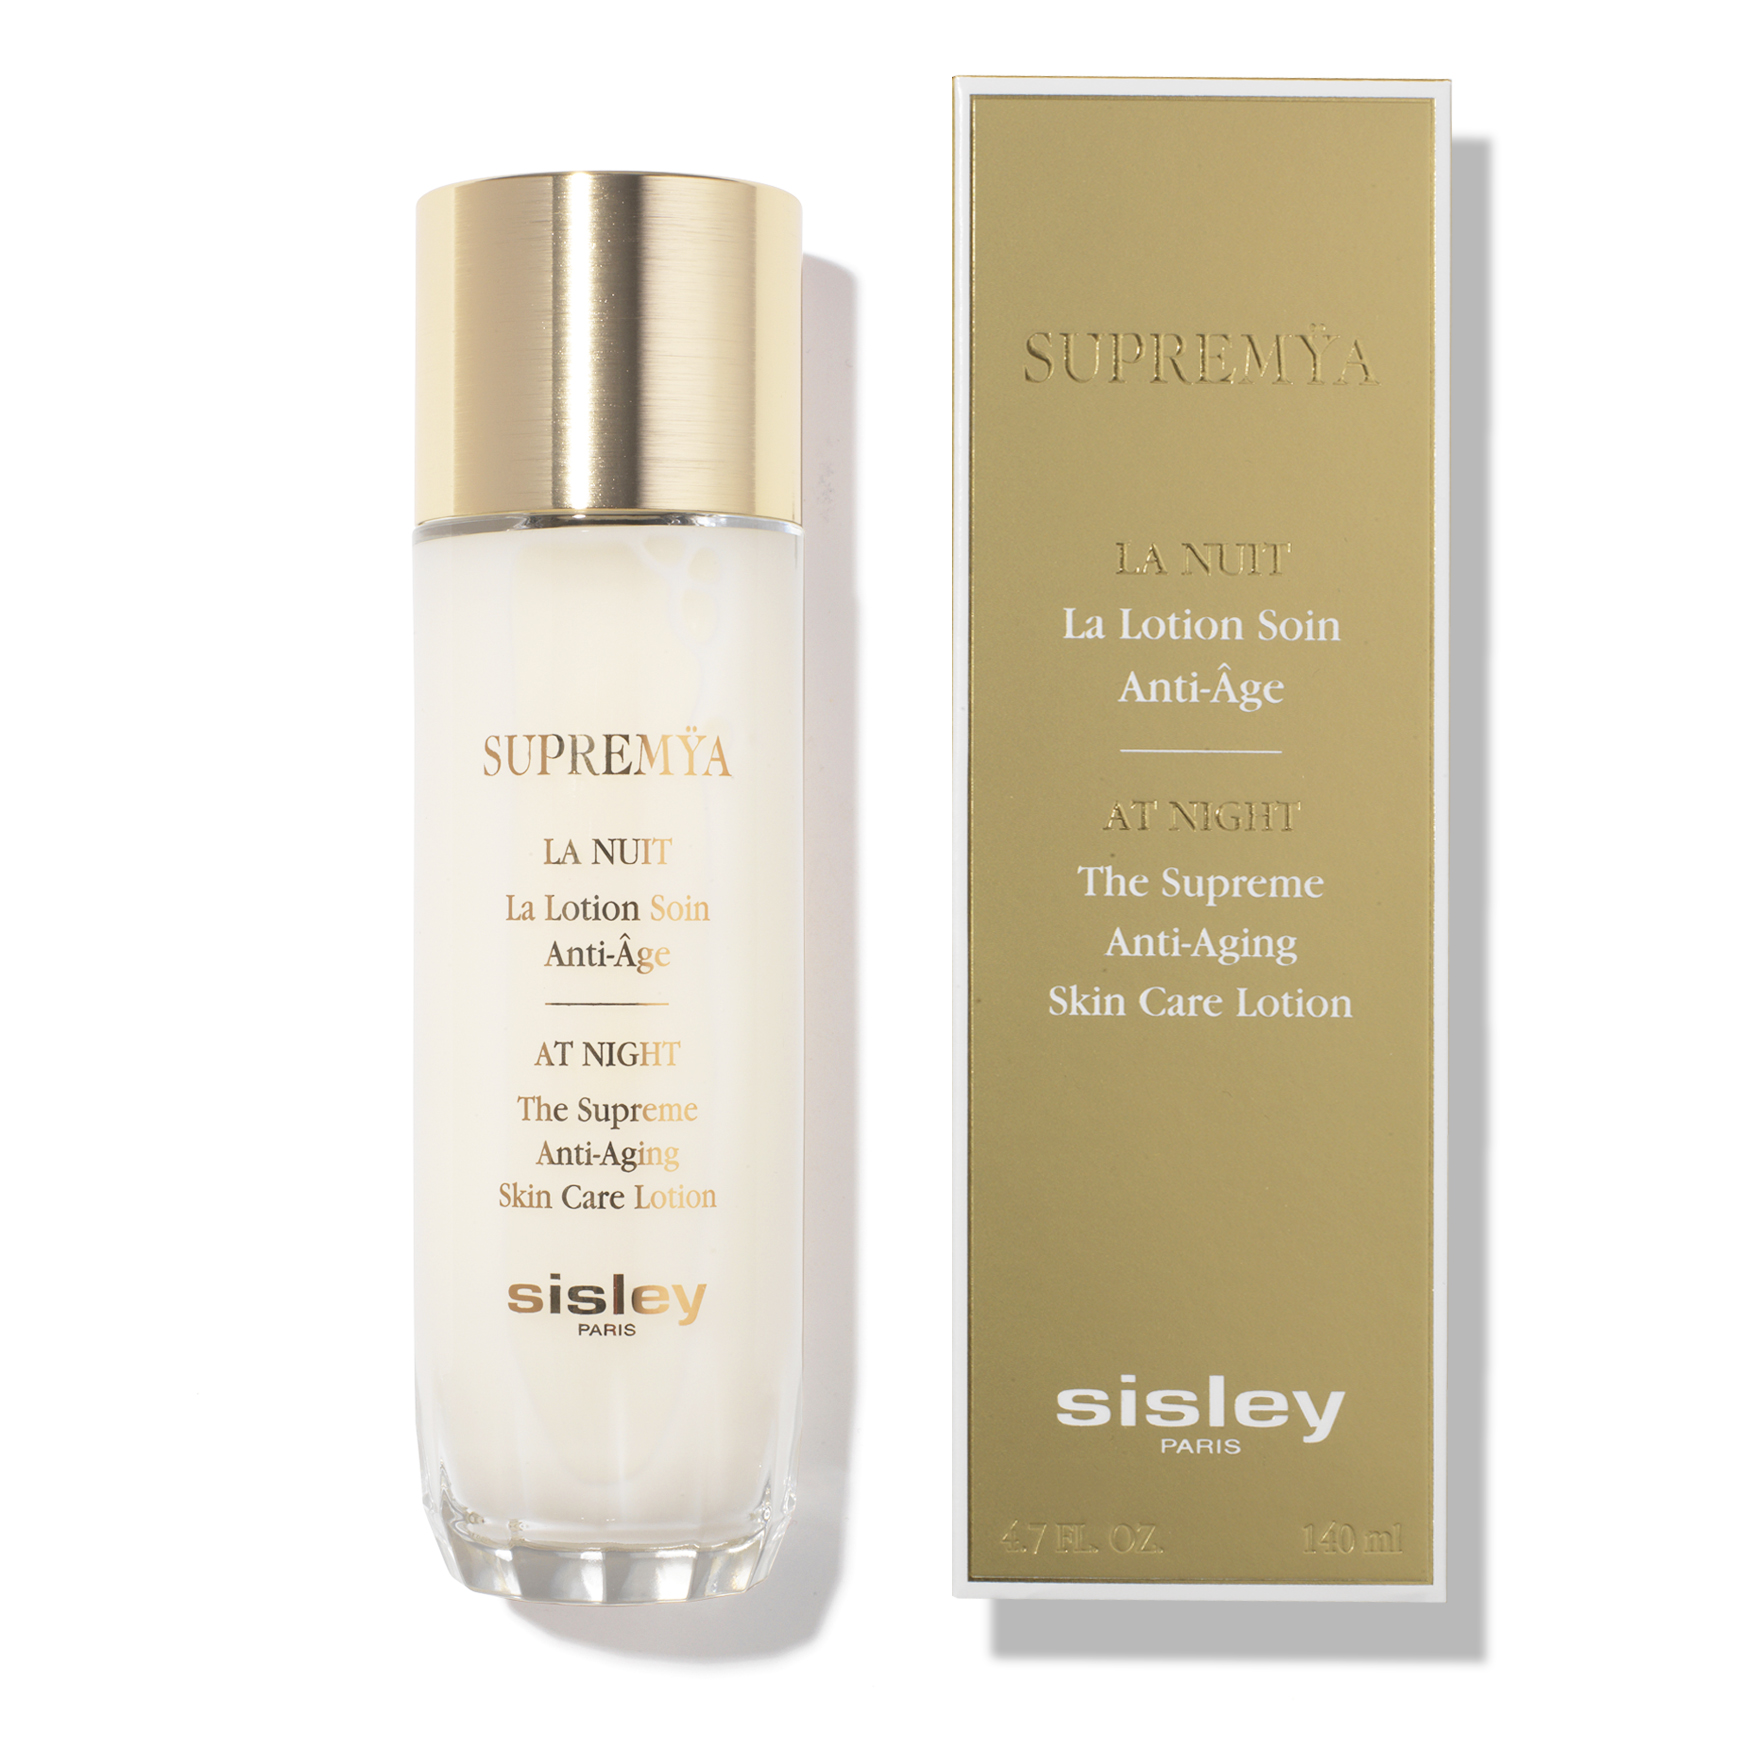 Sisley-Paris Supremya At Night The Supreme Anti-Ageing Skin Care Lotion |  Space NK